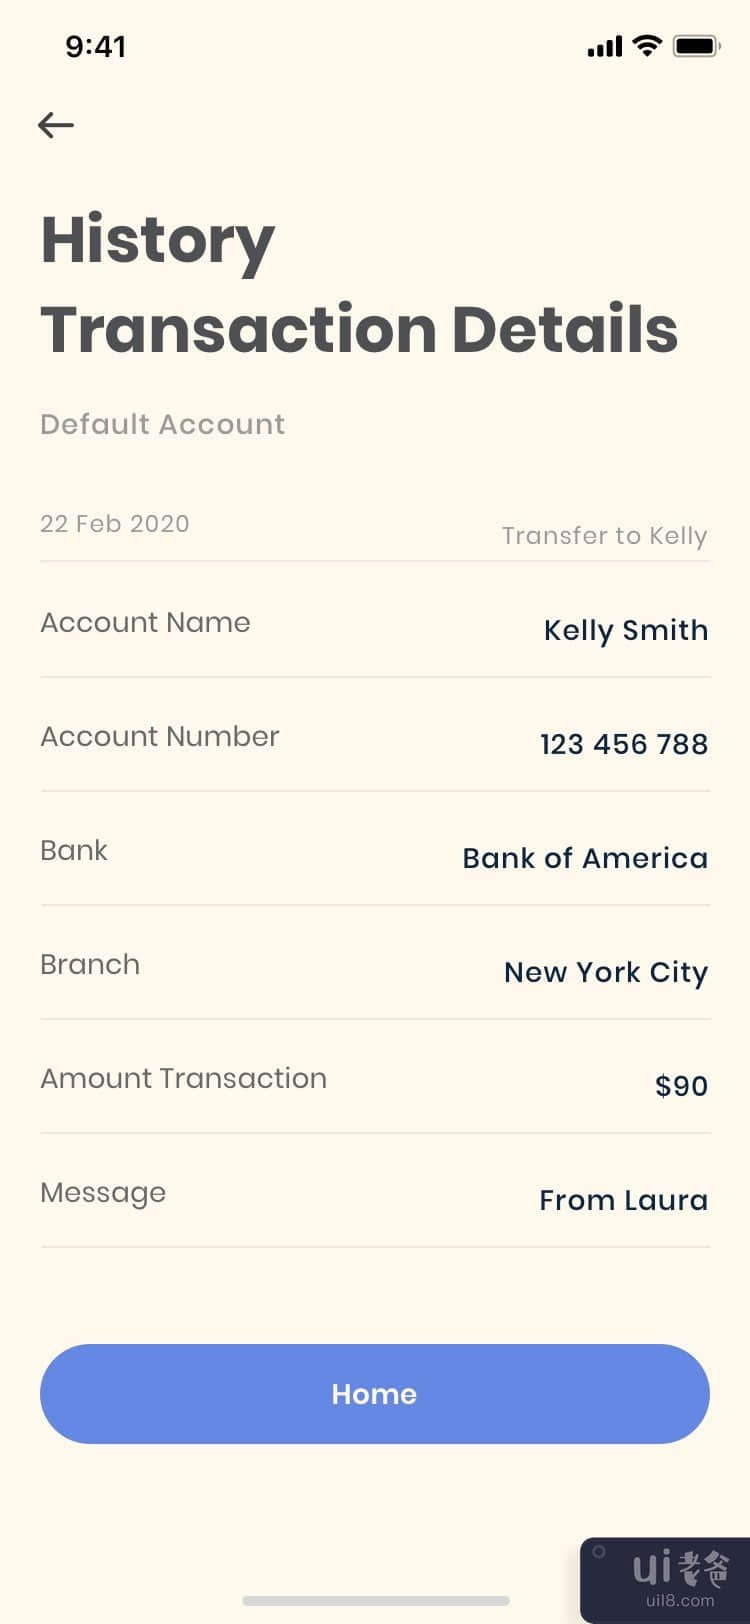 Vintage - 银行移动应用模板 - 历史交易(Vintage - Banking mobile app template - History Transaction)插图1